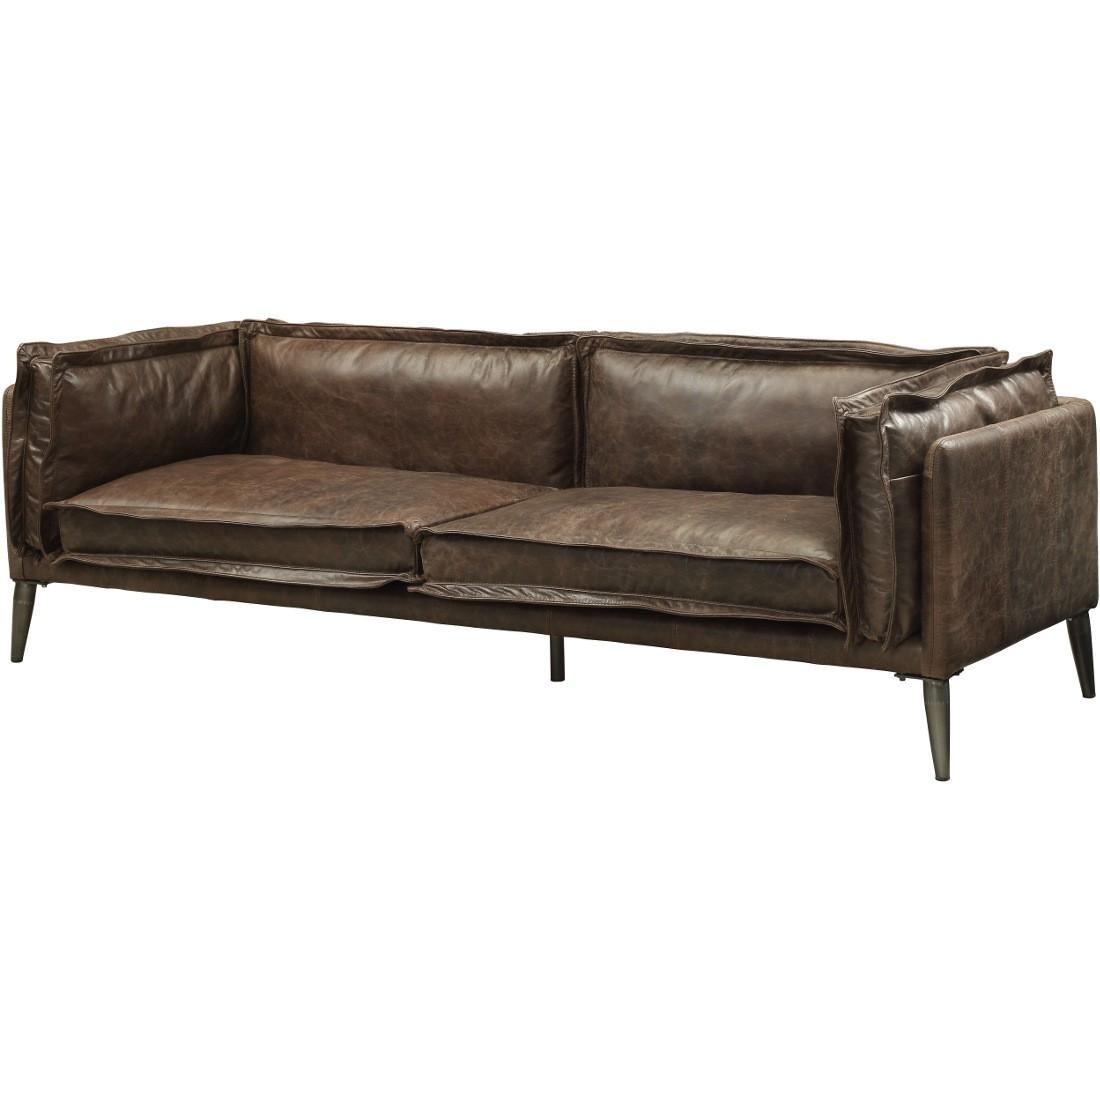 Contemporary Sofa SKU: W004086635 SKU: W004086635 in Chocolate, Brown Top grain leather